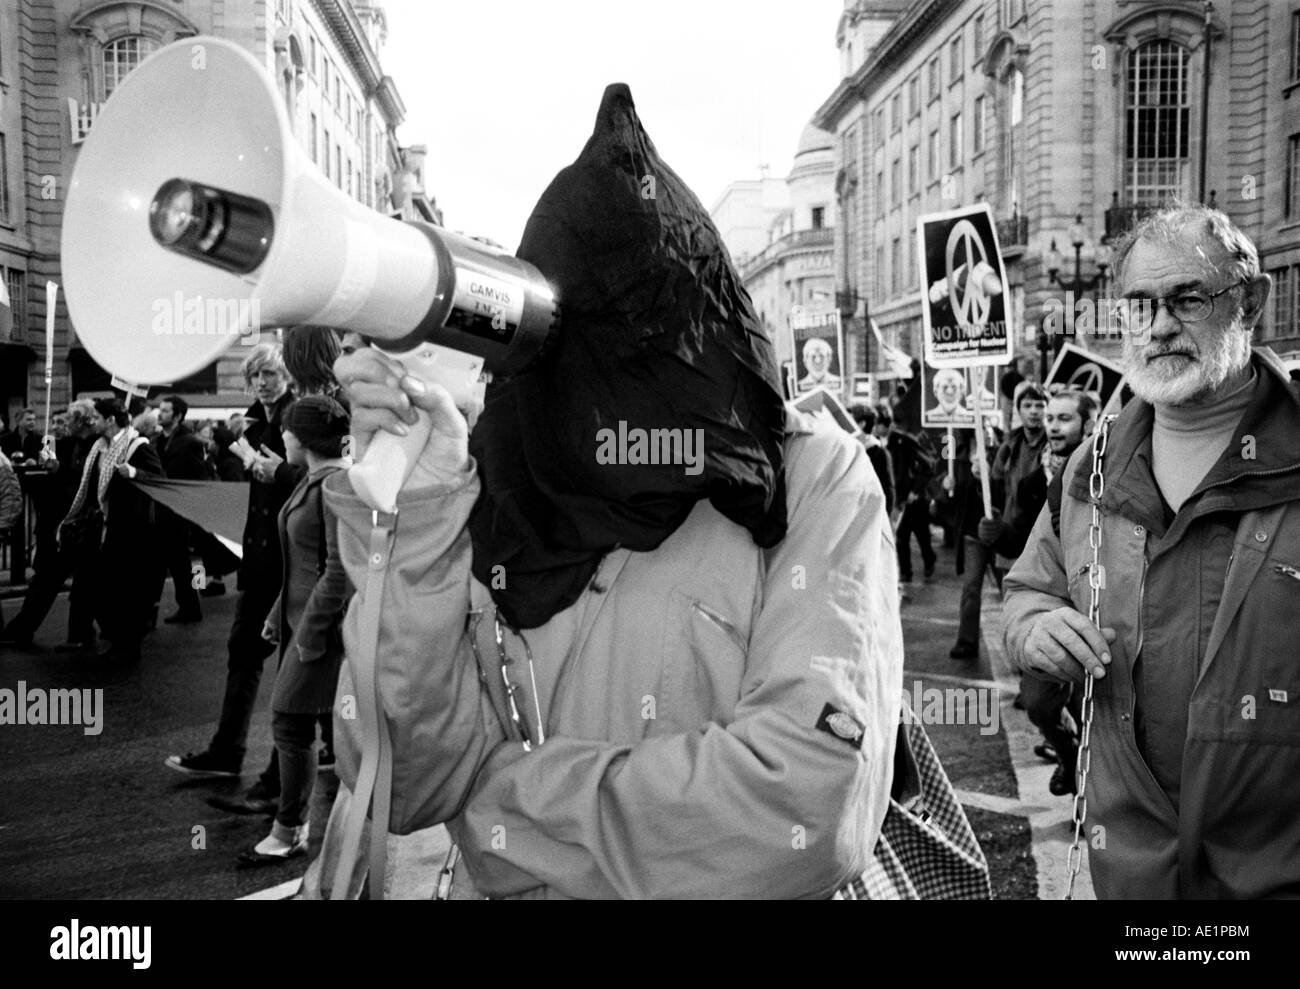 Anti Guantanamo Bay protestors walk along Piccadilly Circus during an anti Iraq war march in London UK Stock Photo